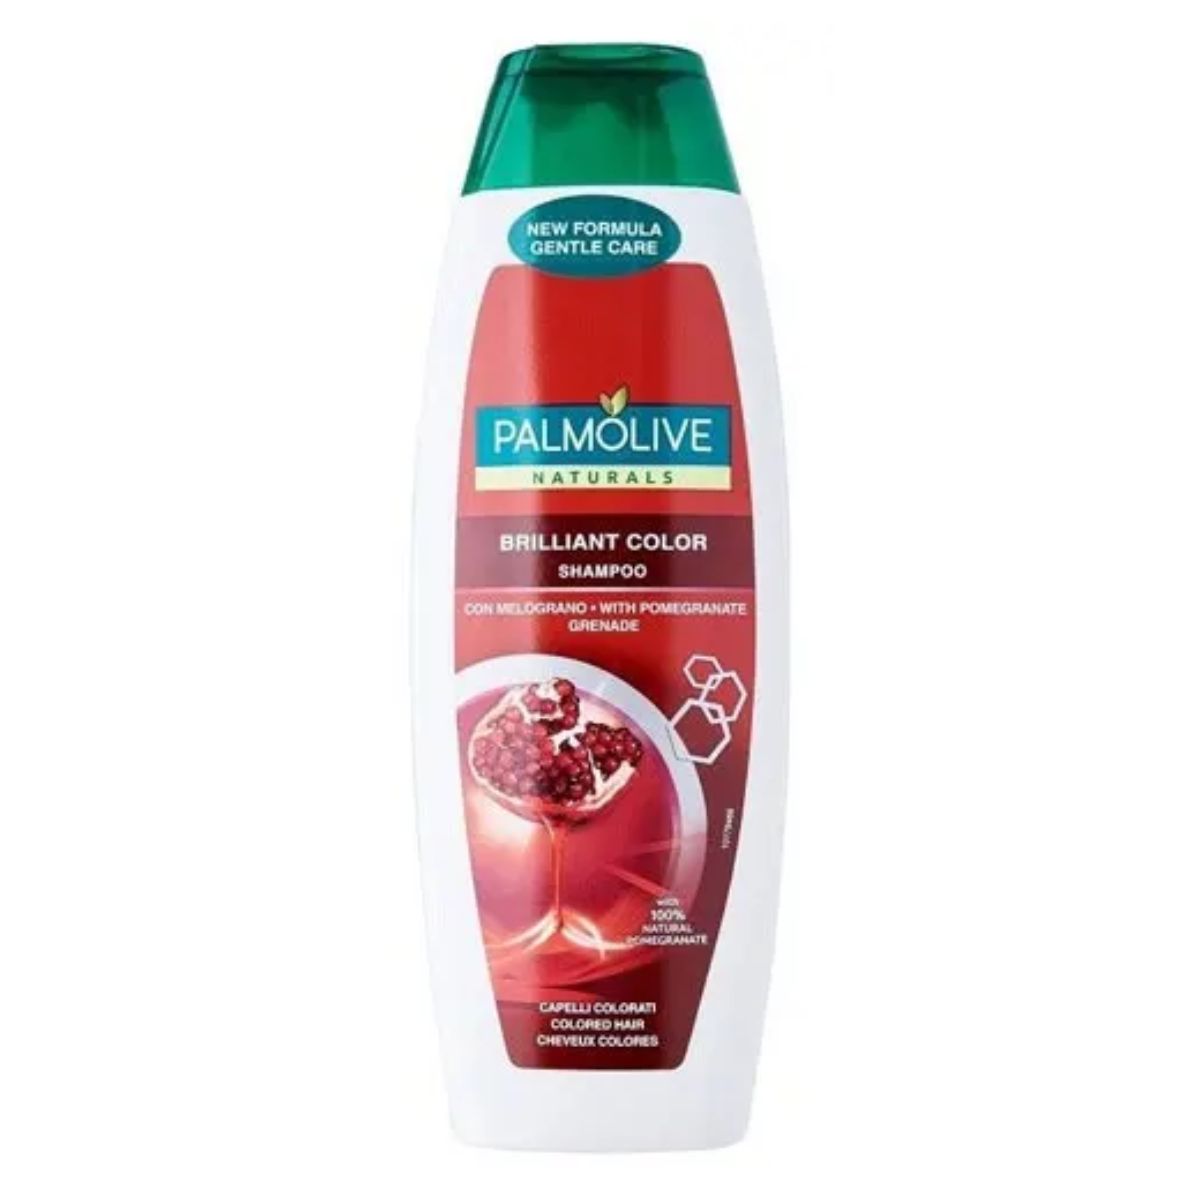 Palmolive Naturals Shampoo Brilliant Colour - 350ml.